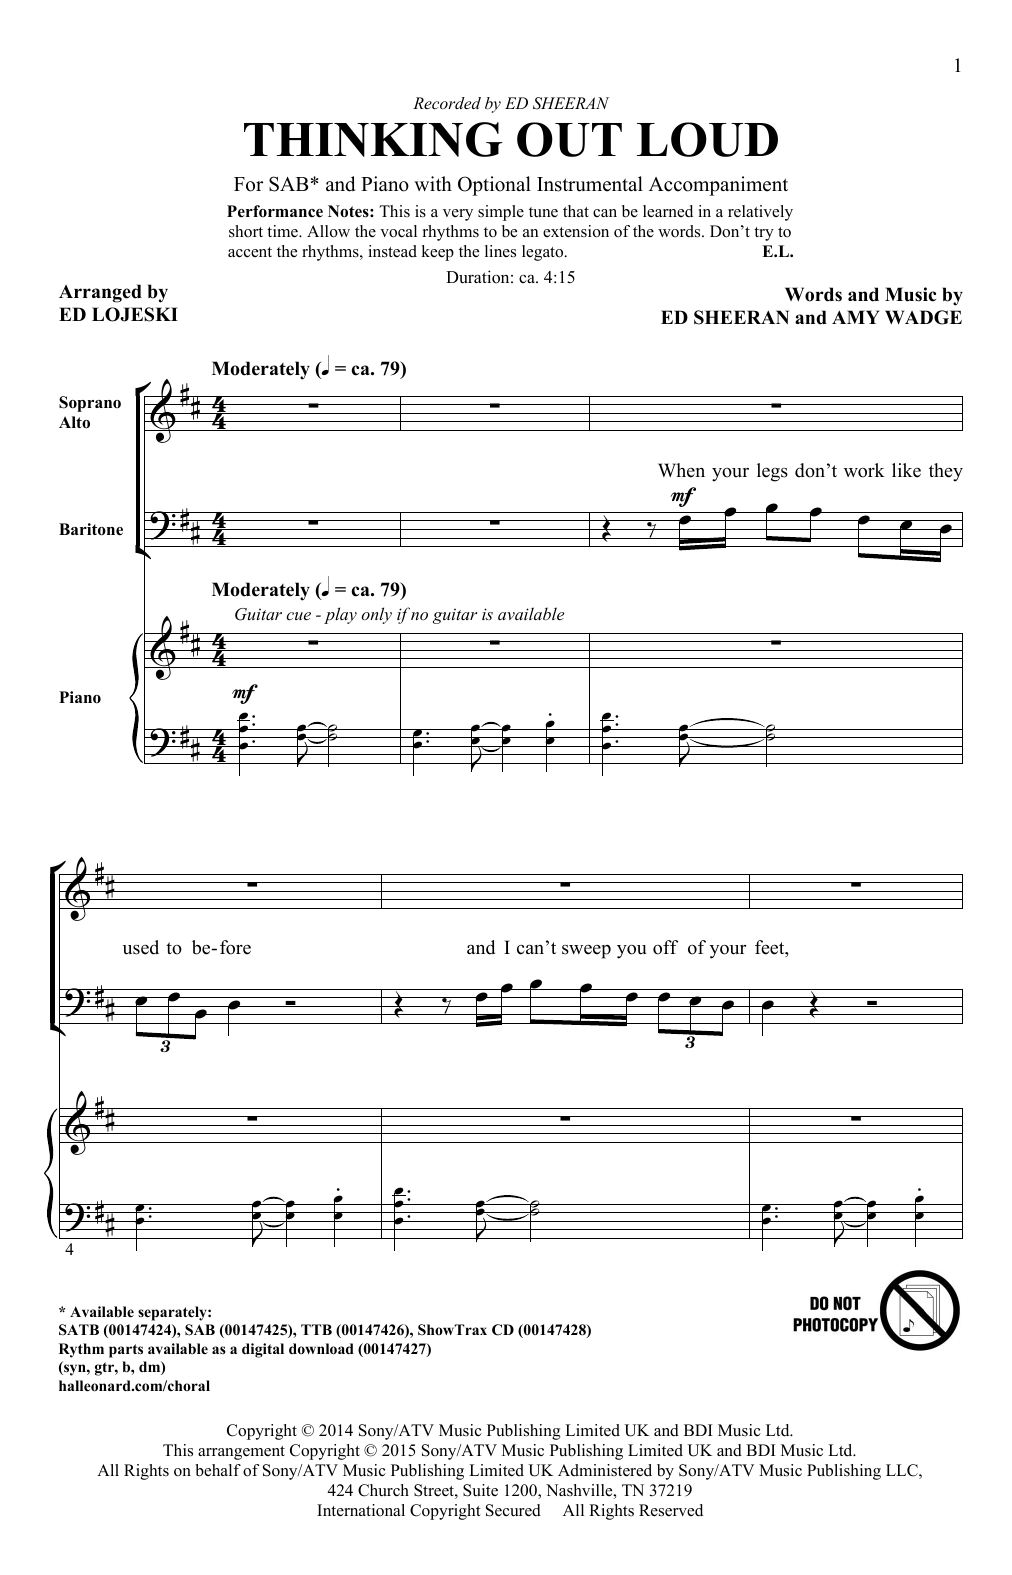 Ed Sheeran Thinking Out Loud (arr. Ed Lojeski) sheet music notes and chords arranged for TTBB Choir